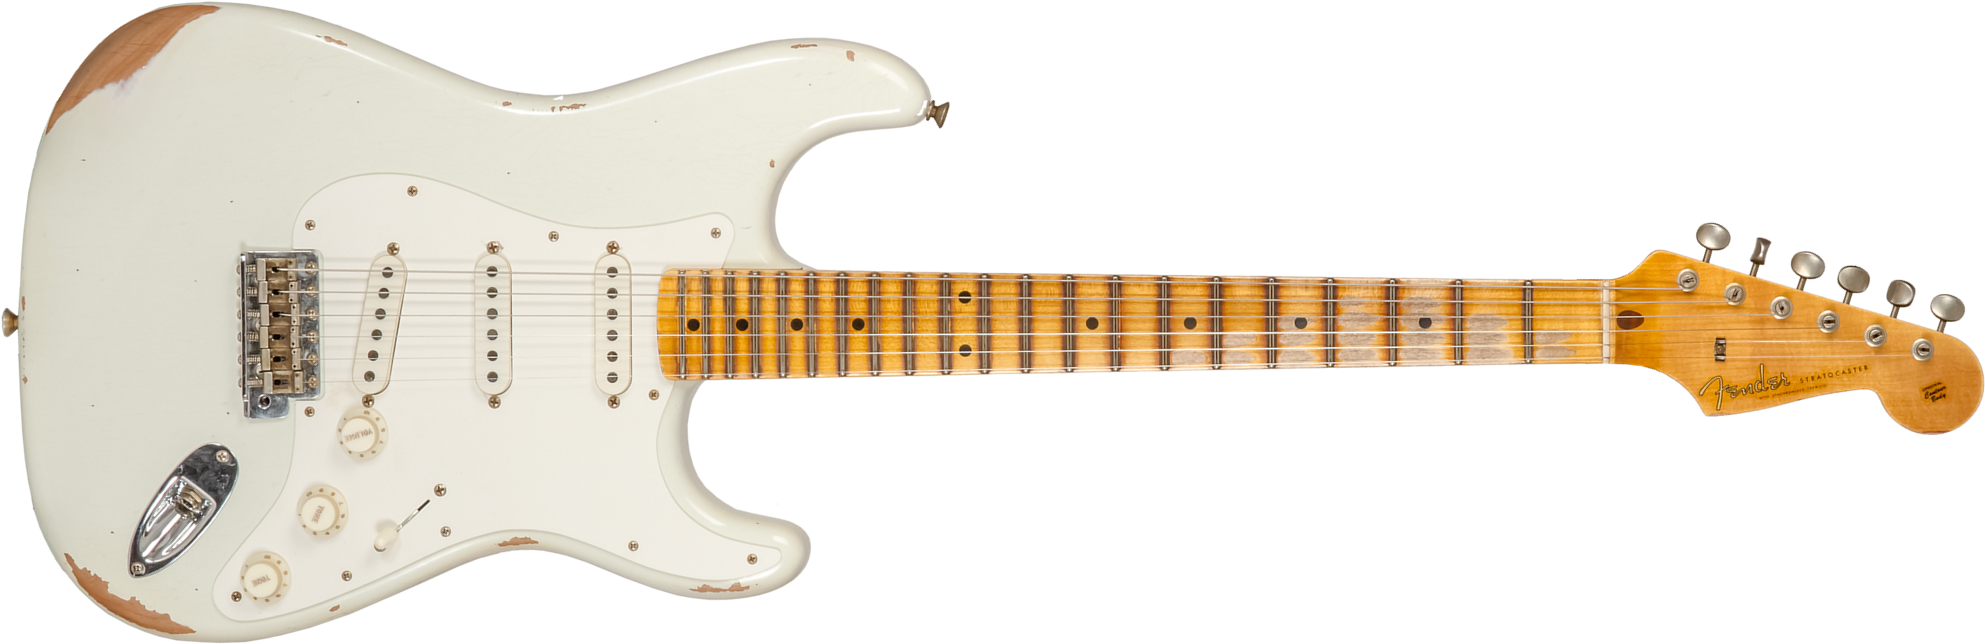 Fender Custom Shop Strat Fat 50's 3s Trem Mn #cz570495 - Relic India Ivory - E-Gitarre in Str-Form - Main picture